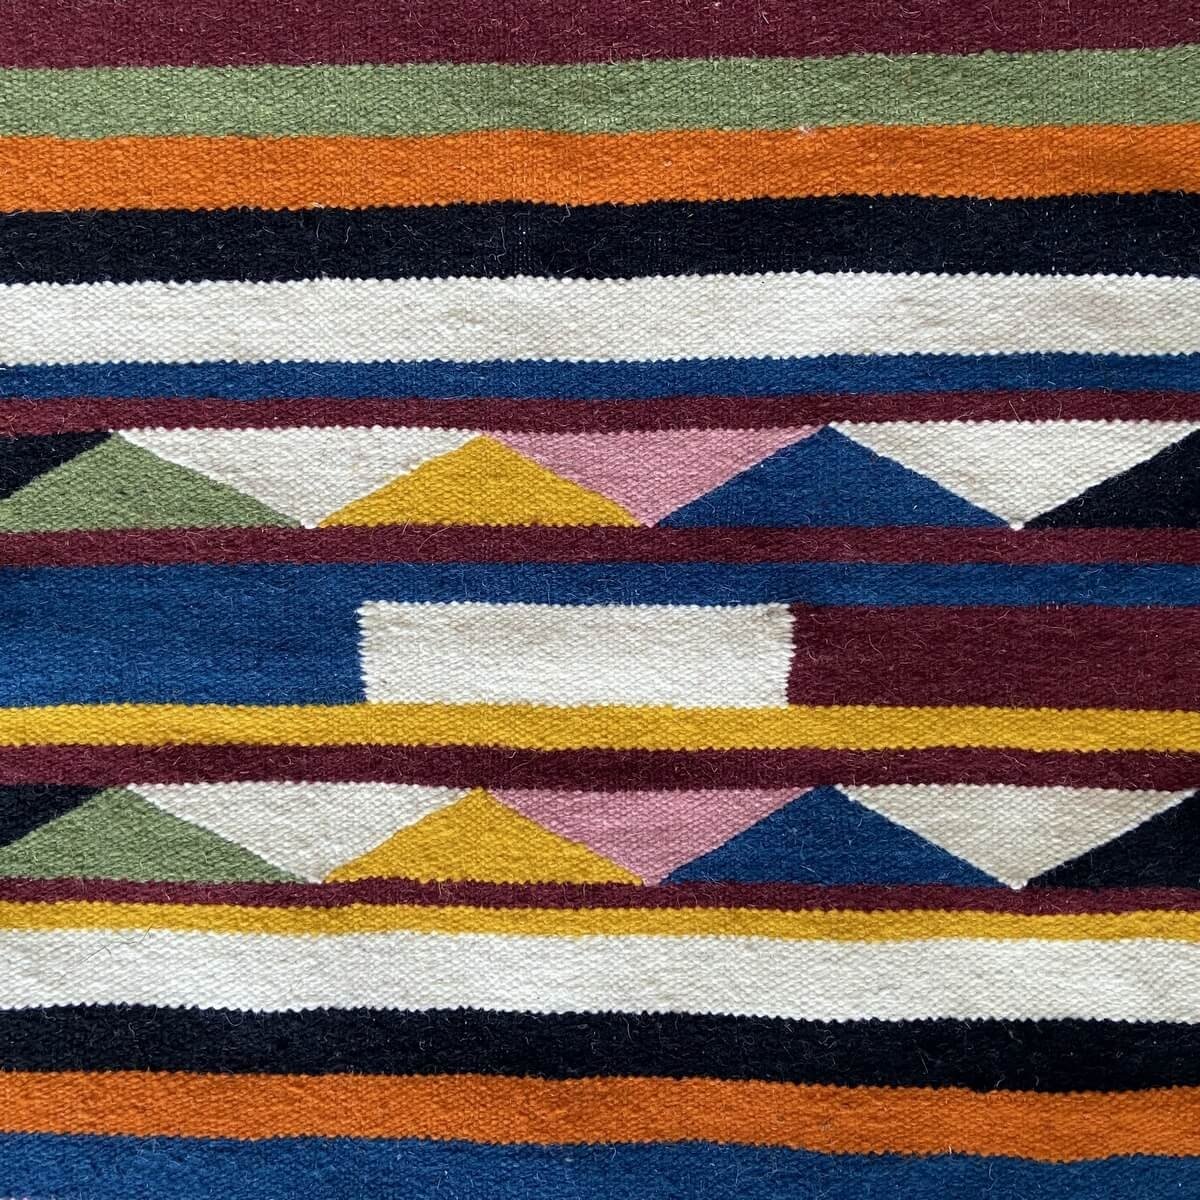 Berber tapijt Tapijt Kilim Orti 65x95 Veelkleurig (Handgeweven, Wol, Tunesië) Tunesisch kilimdeken, Marokkaanse stijl. Rechthoek